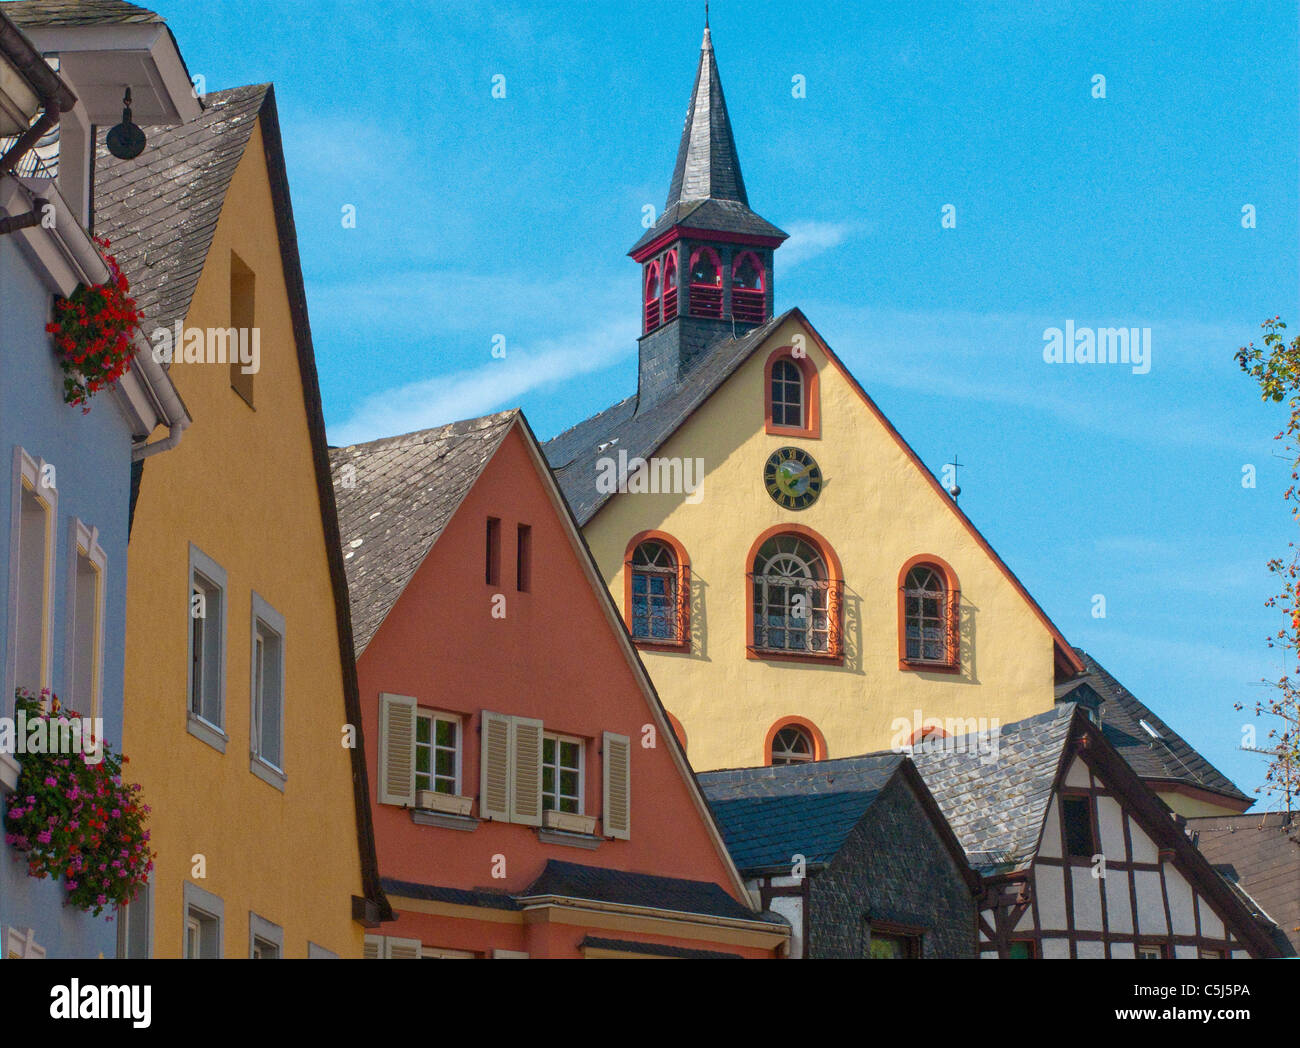 Bunte Haeuser in der Altstadt, historischer Stadtkern, Bernkastel-Kues, Mosel, case nella città vecchia, Moselle Foto Stock